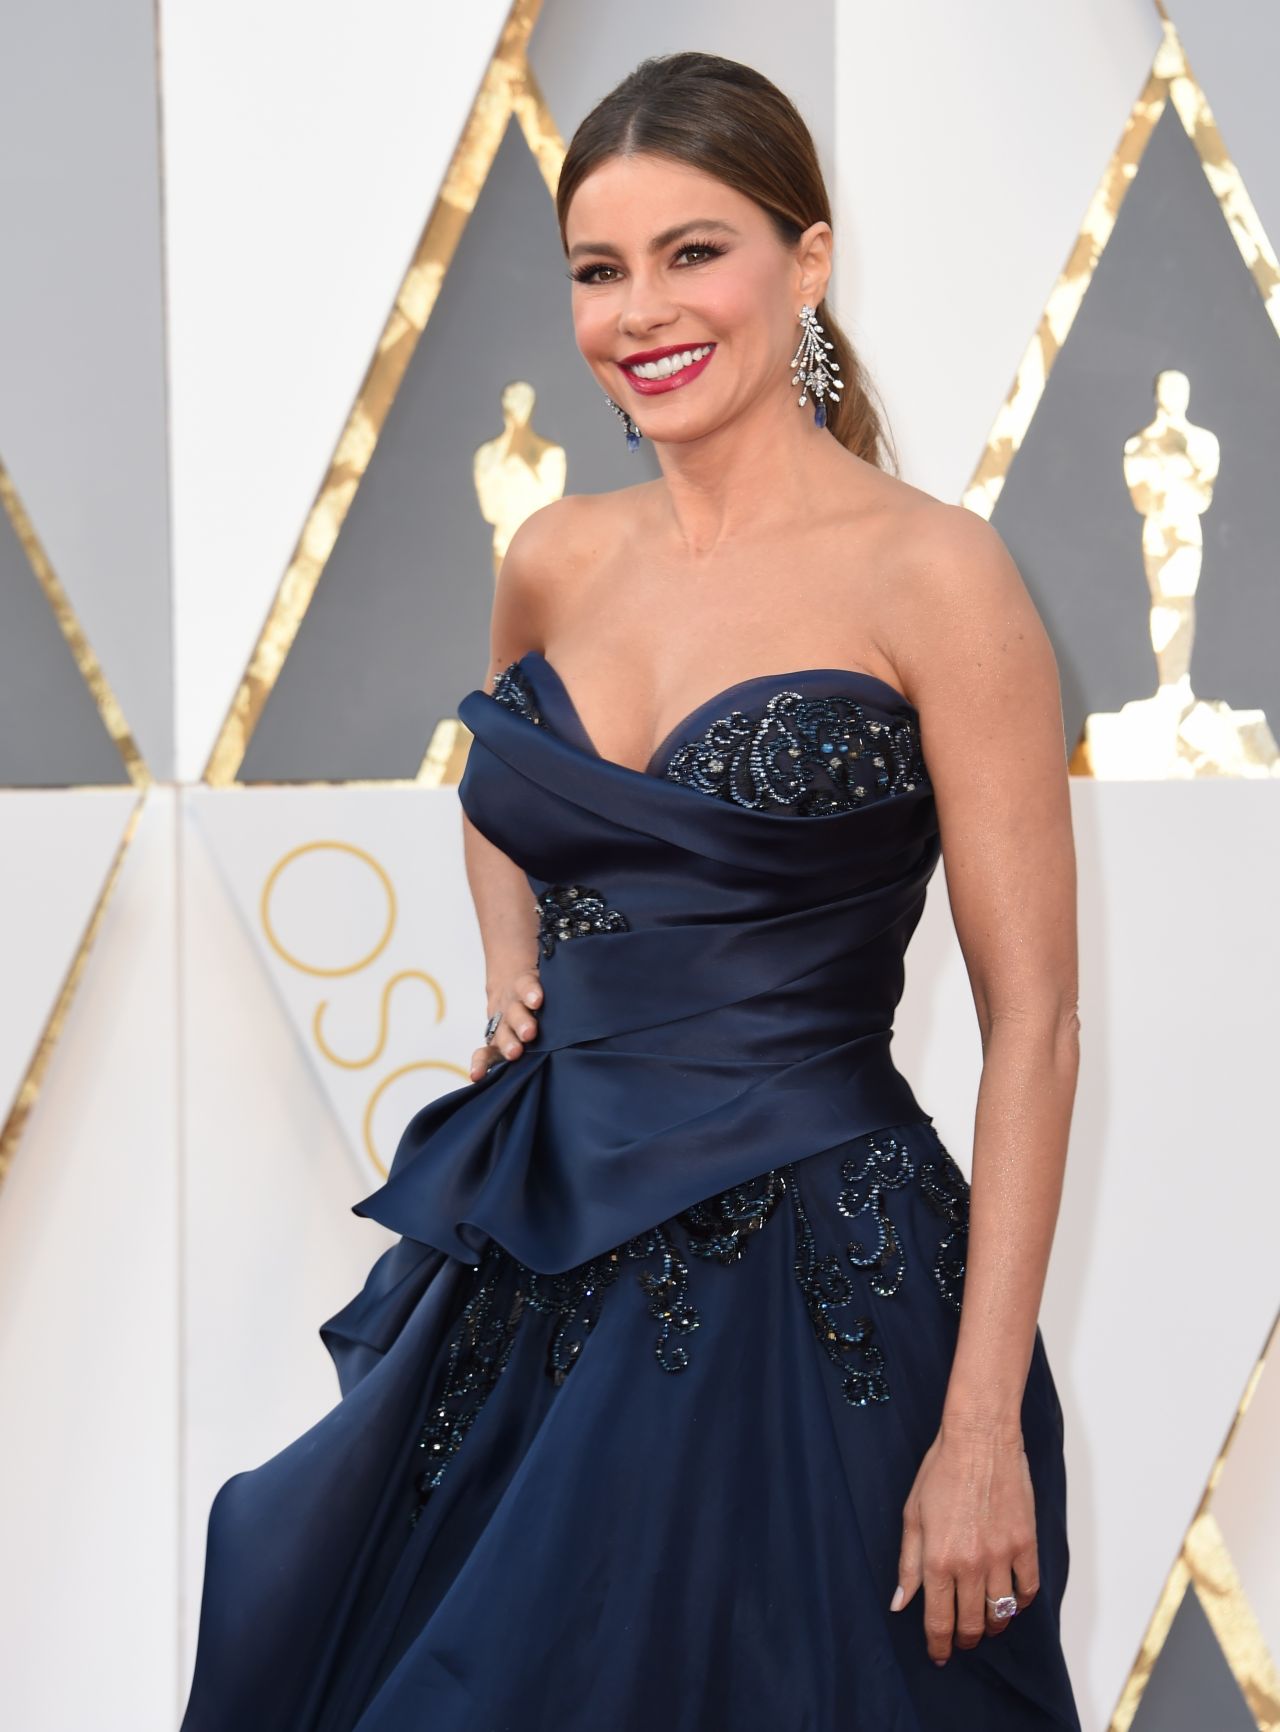 Sofia Vergara in Navy Blue Marchesa Dress at the 2016 Oscars